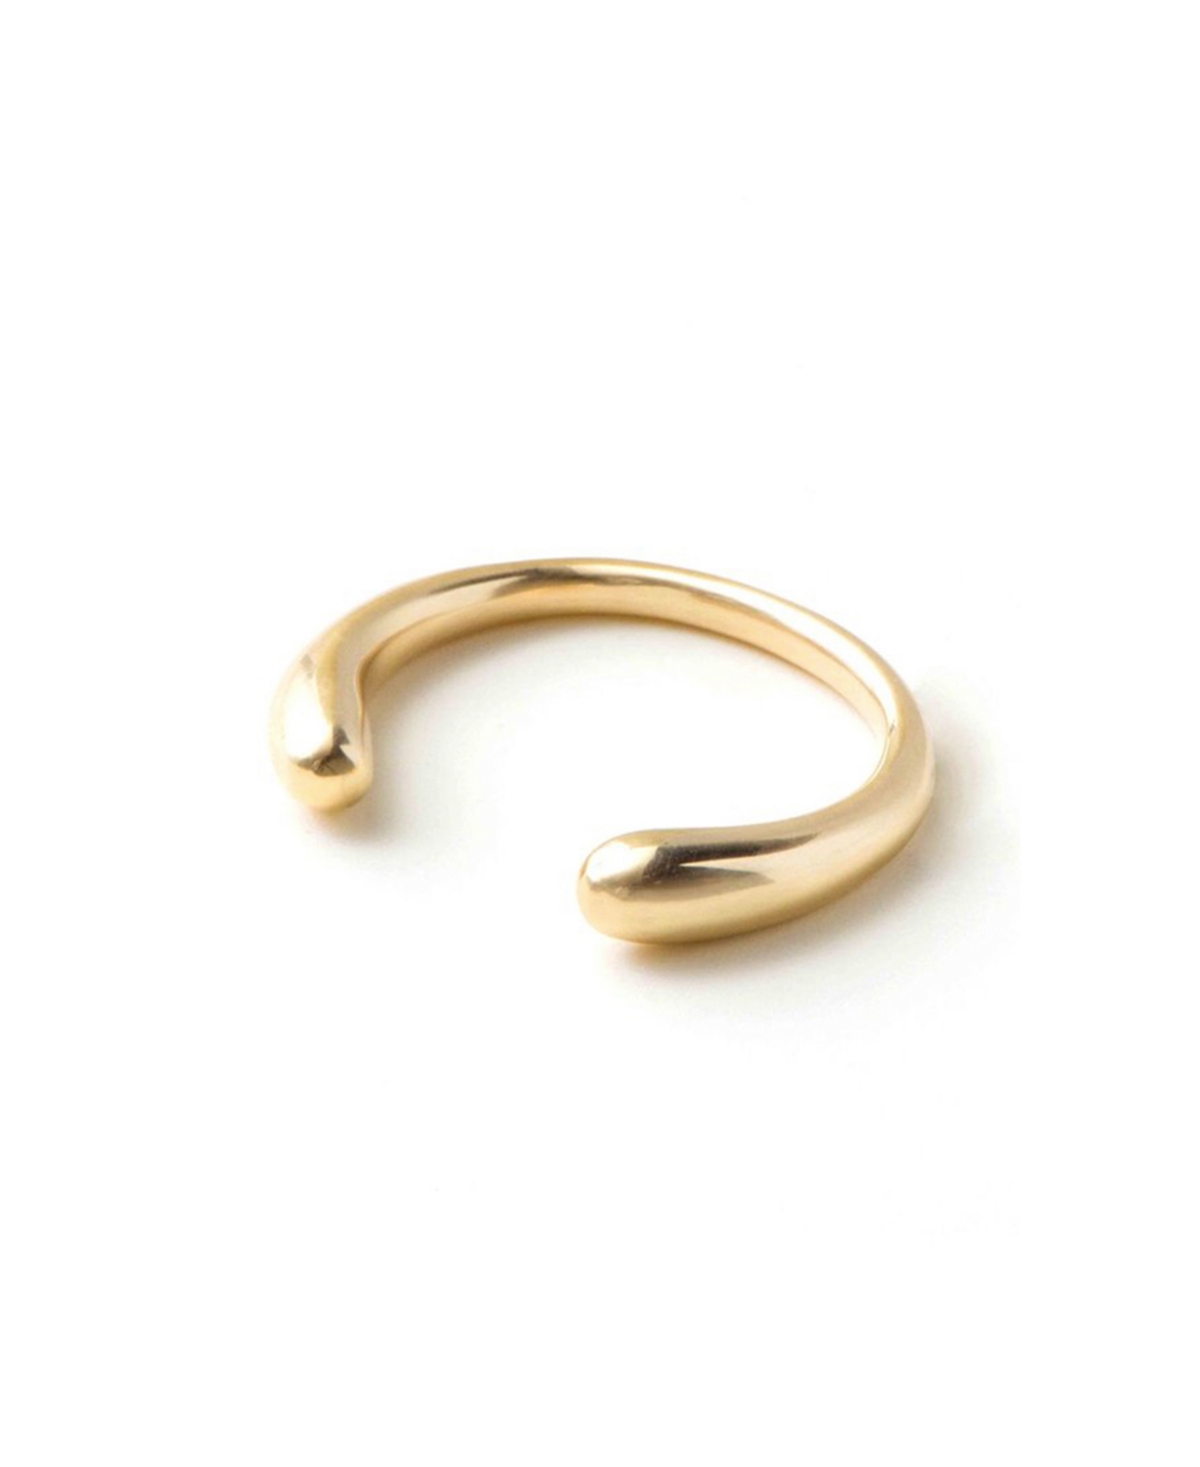 Soko 24k Gold-plated Dash Cuff Bracelet